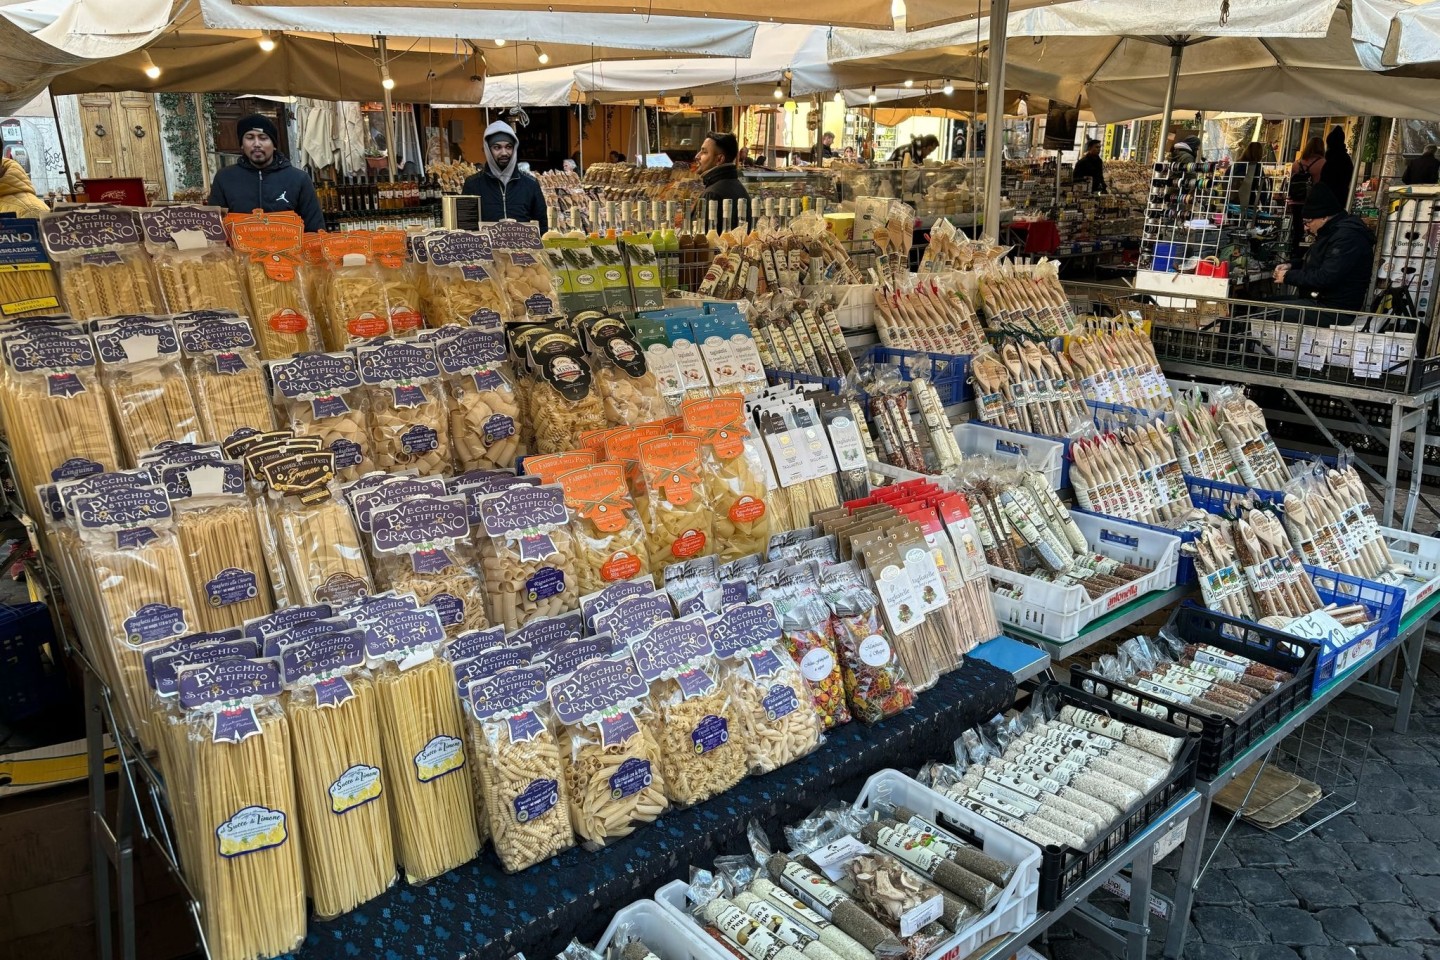 Markt in Rom: Verschiedene Nudelsorten werden auf dem Campo de' Fiori angeboten.